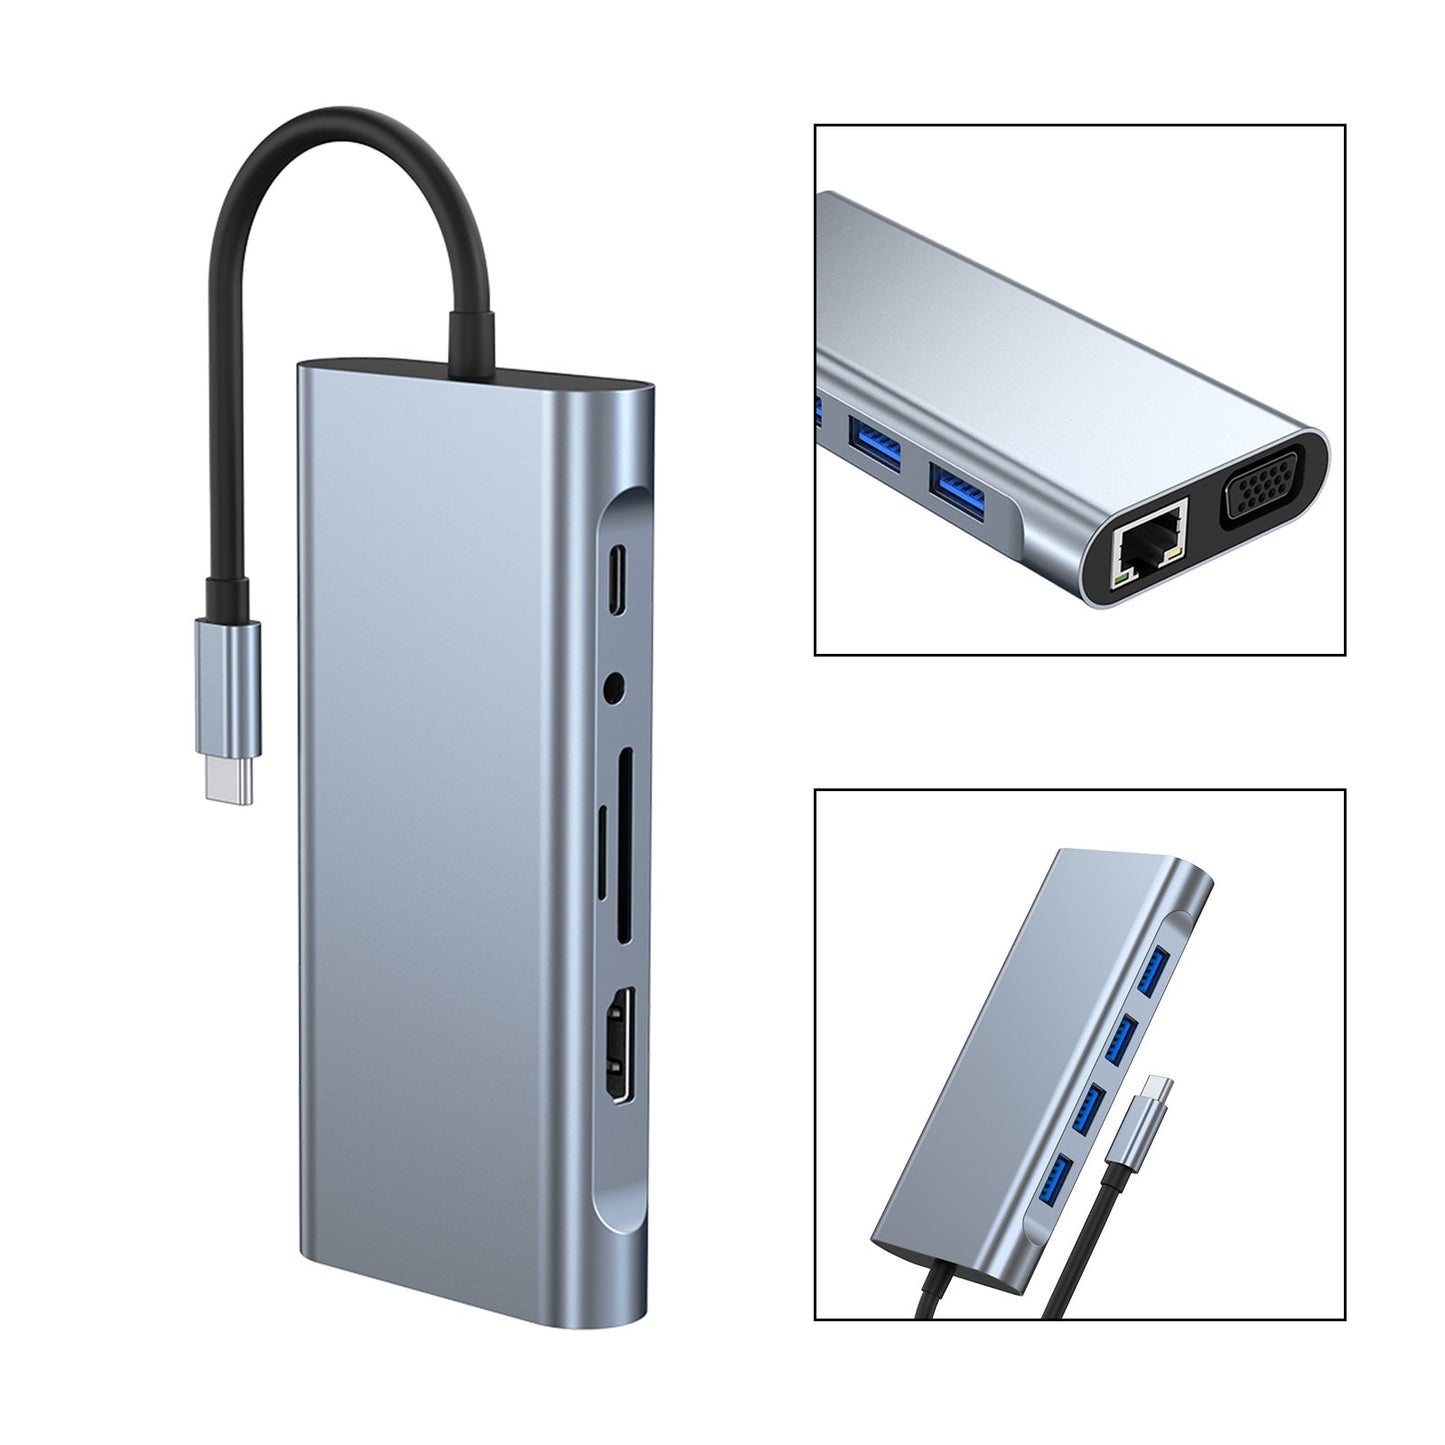 11 en 1 USB-C Type-C Sortie HD Adaptateur 4K USB 3.0 HD HUB Station d'accueil multifonction